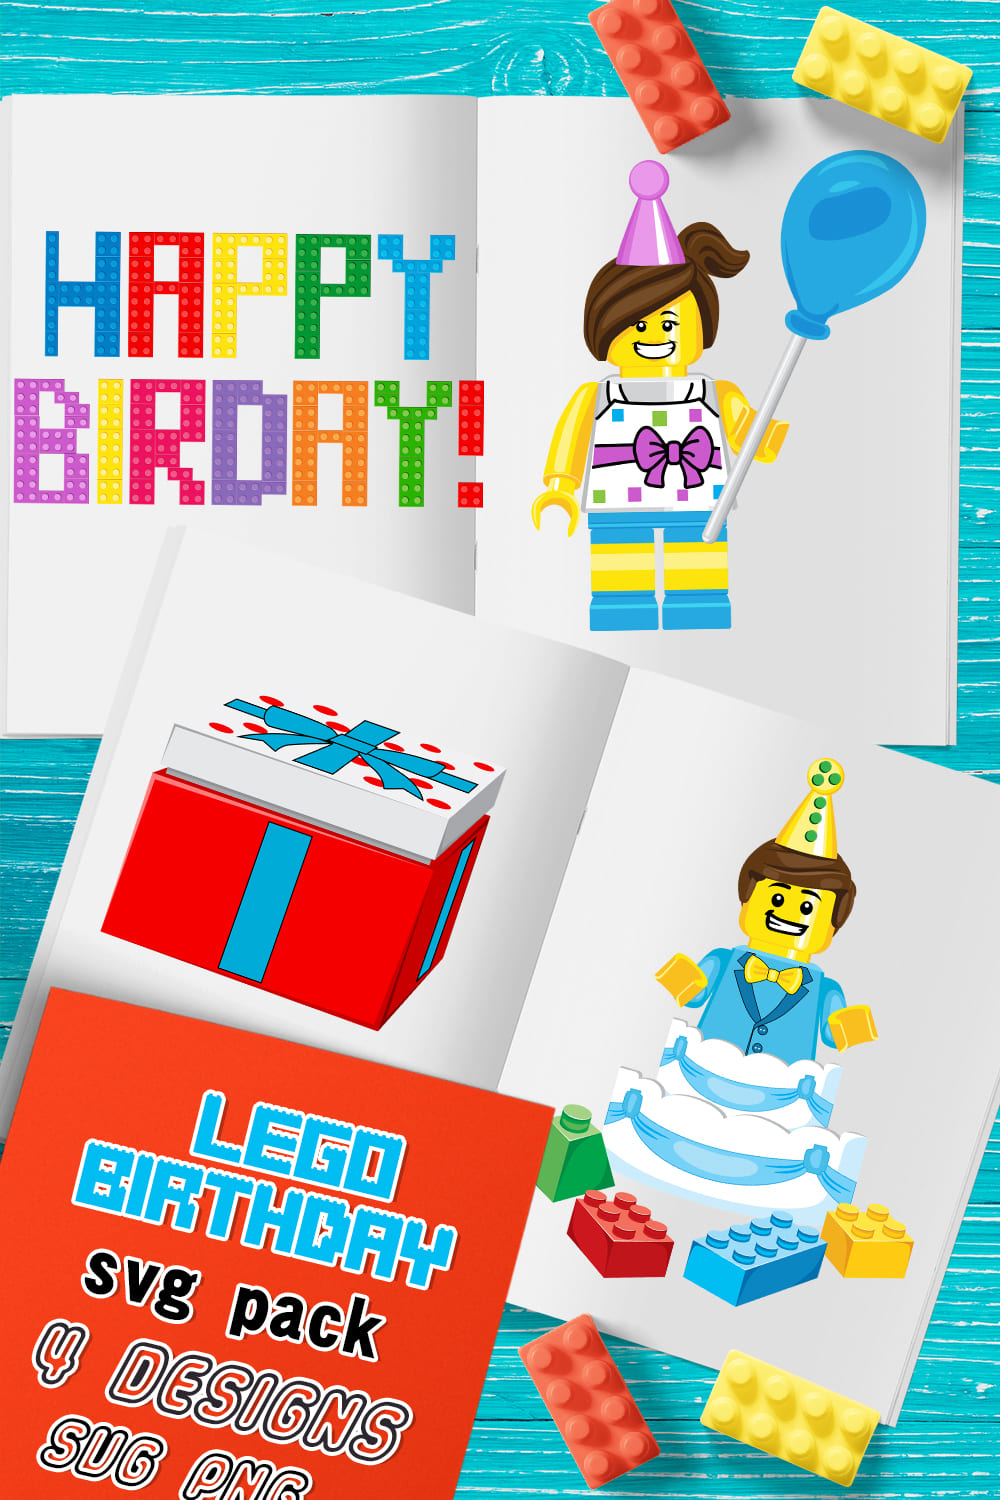 Lego birthday svg - pinterest image preview.